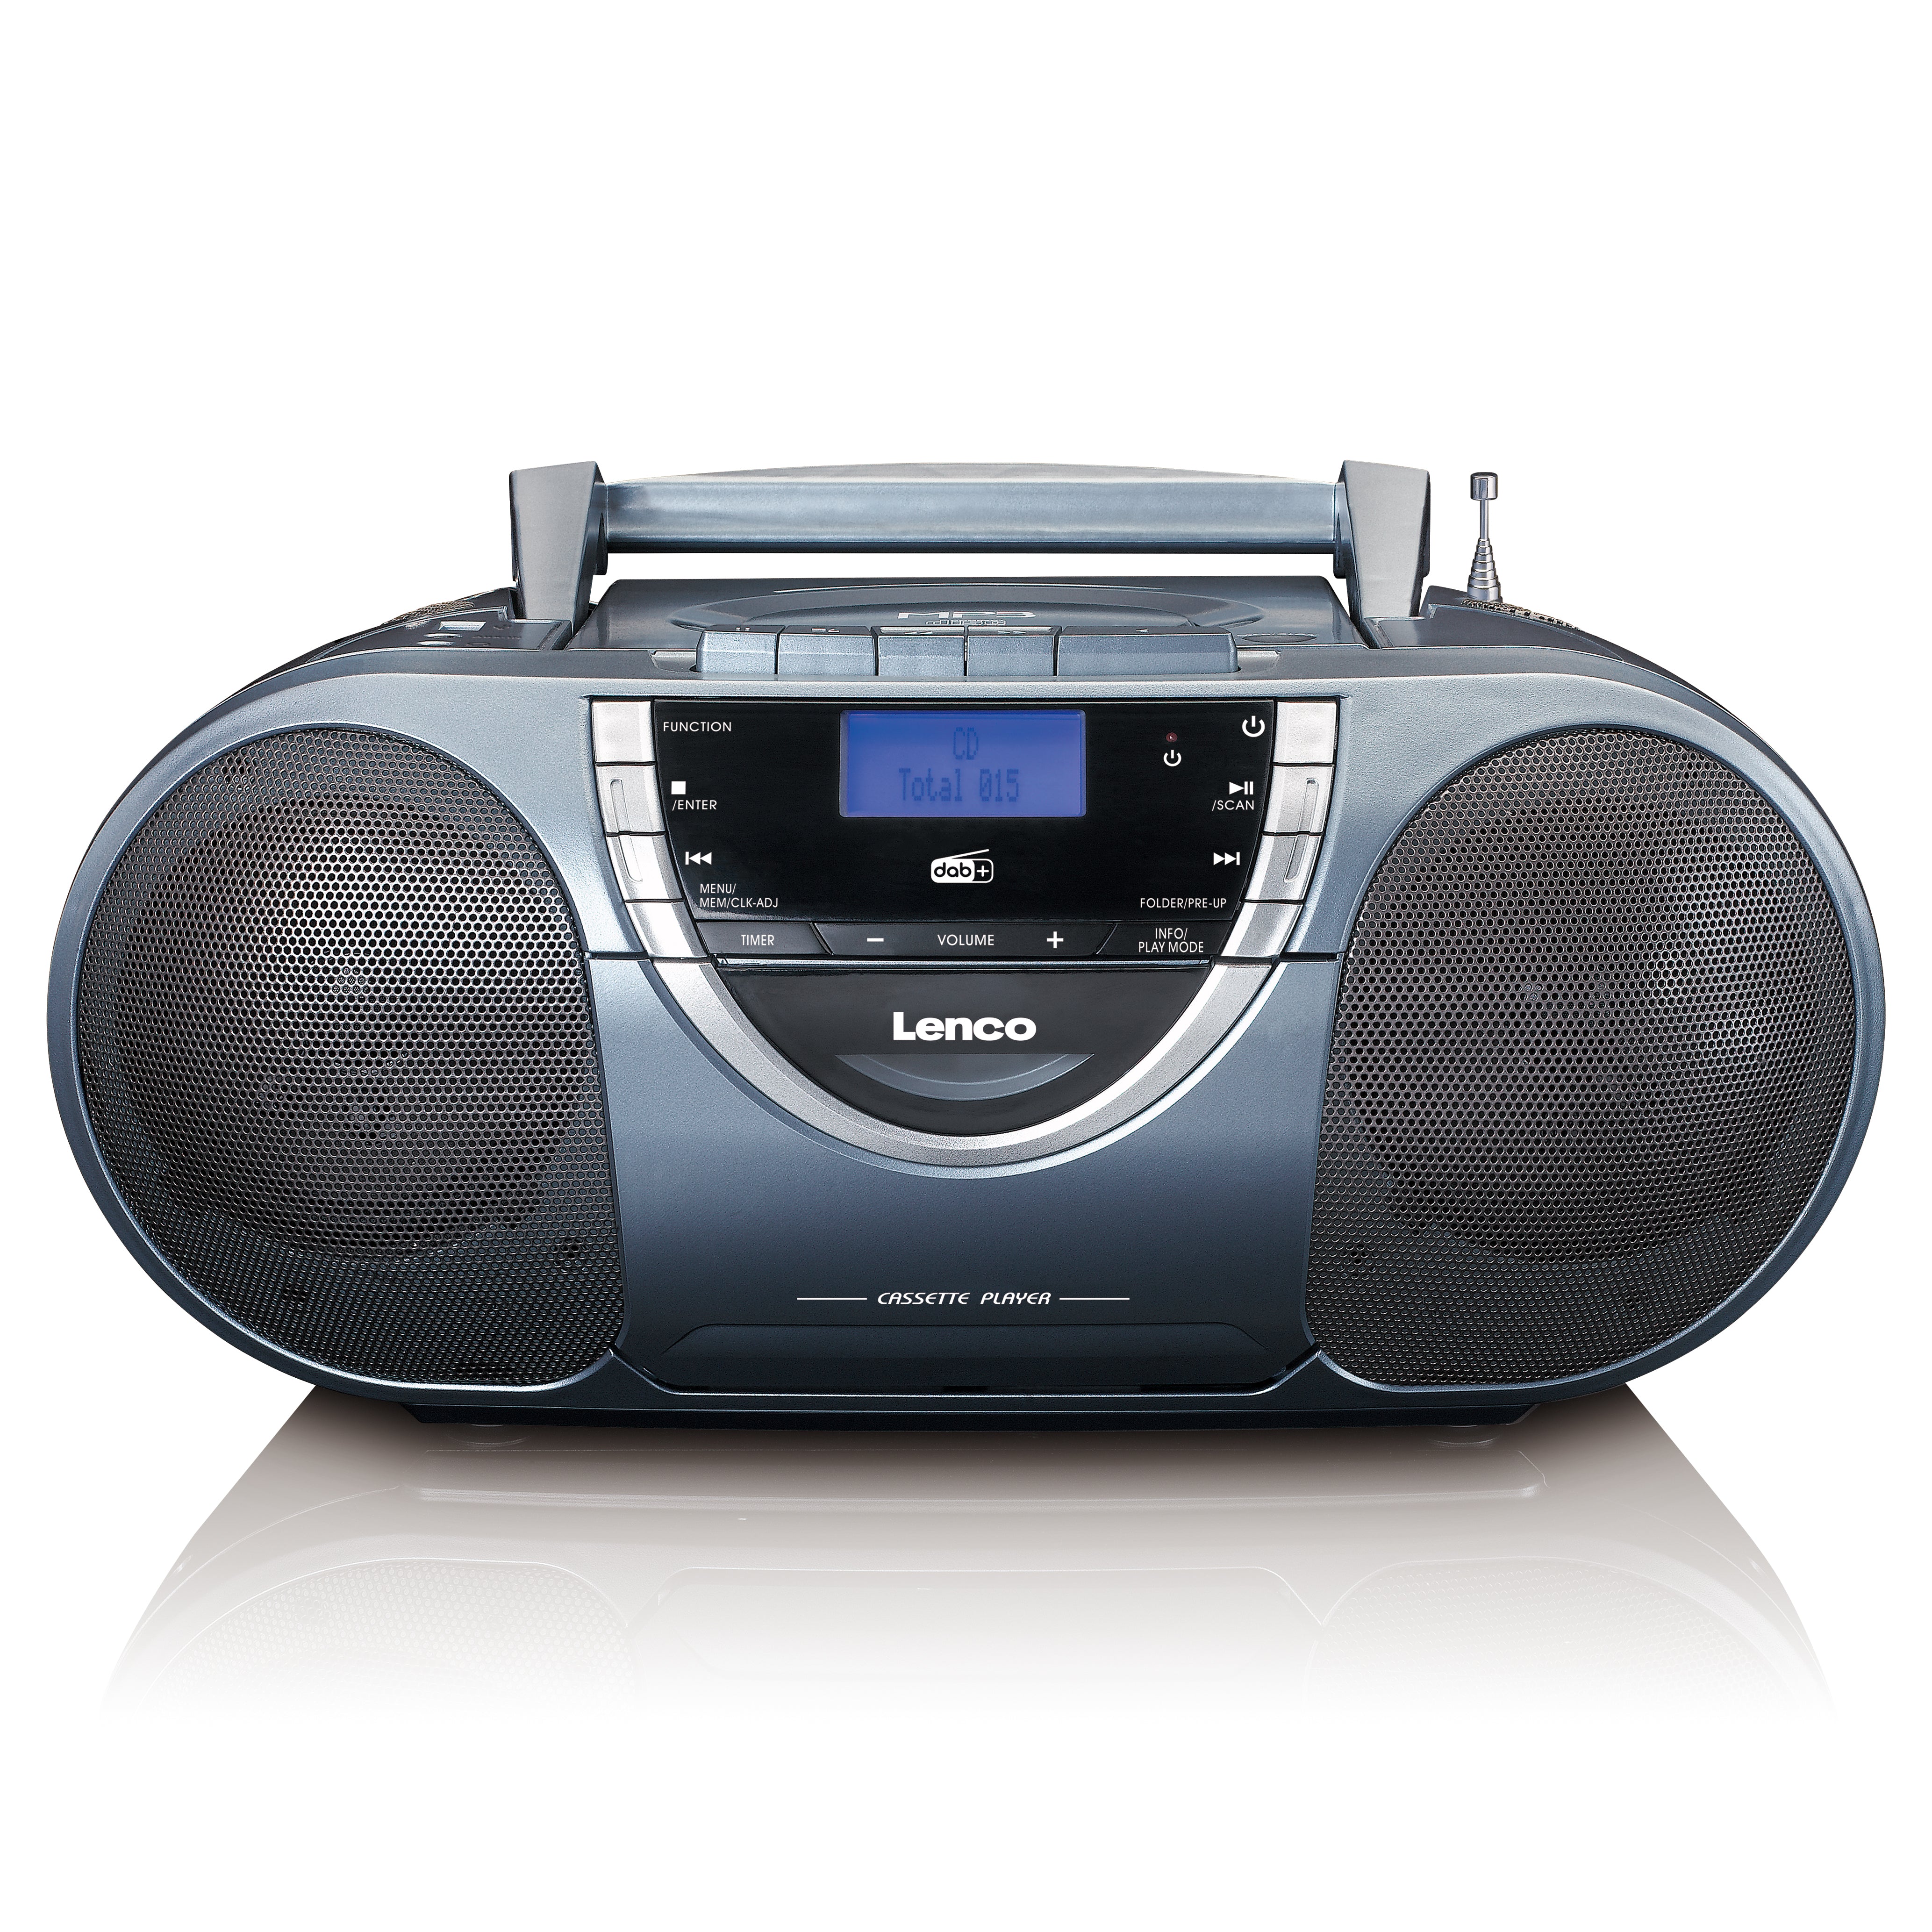 radio - MP3 FM with LENCO -Catalog and Boombox – CD/ DAB+, player SCD-6800GY Lenco